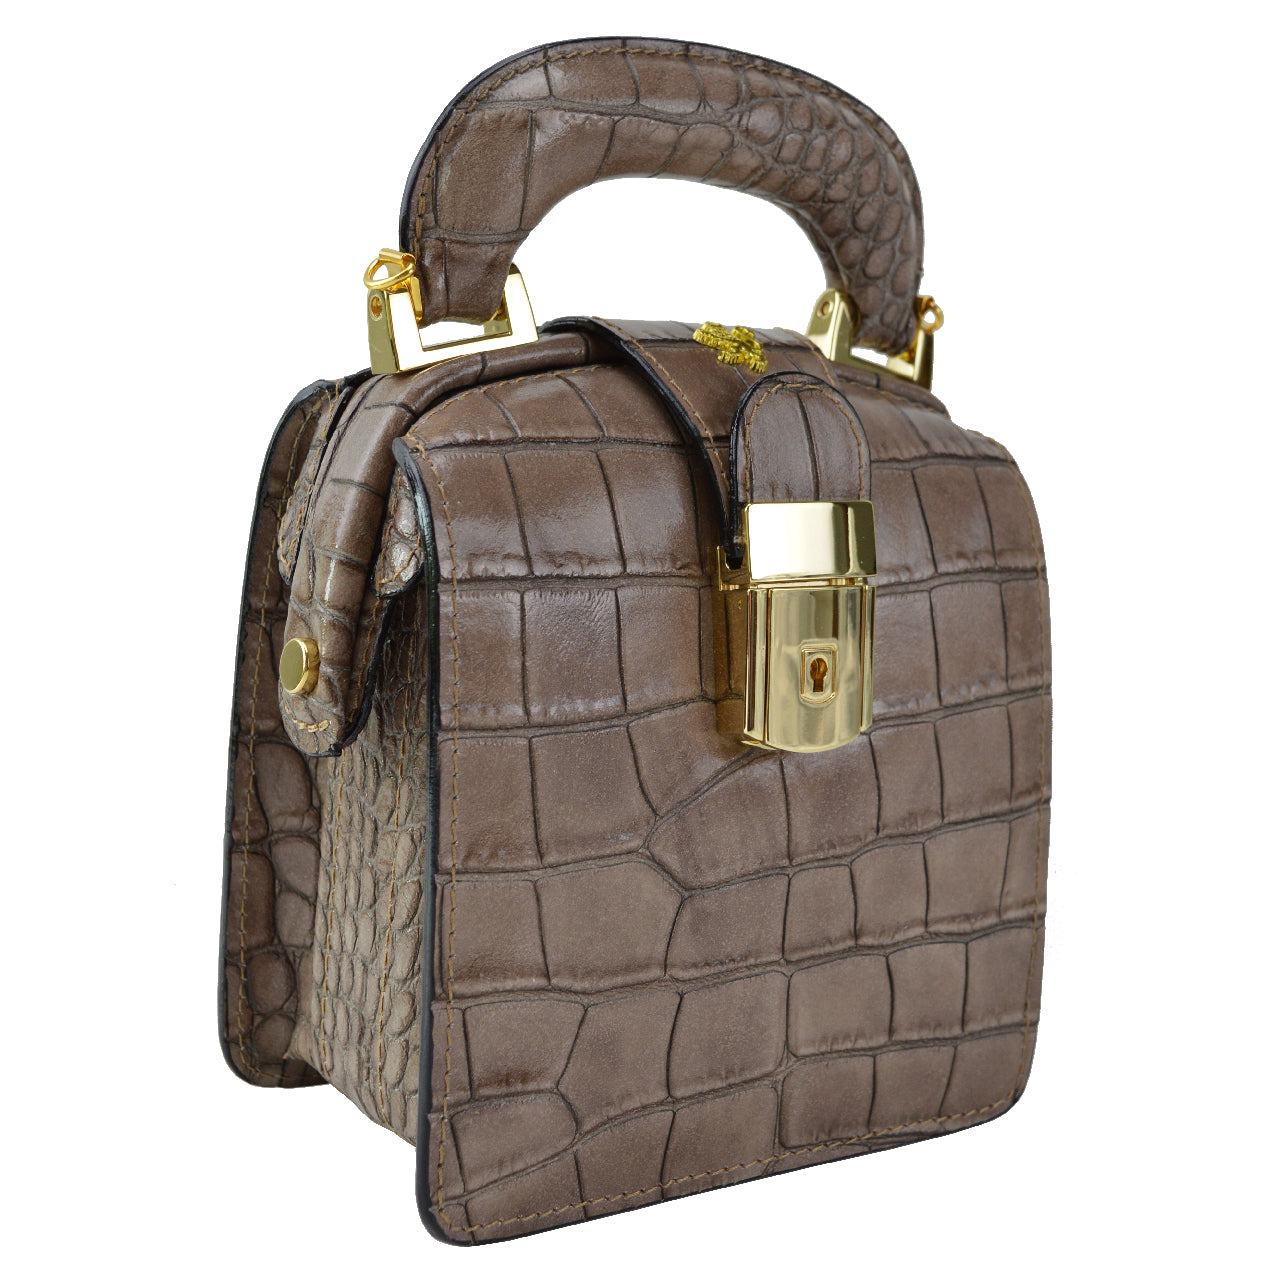 Pratesi Brunelleschi Handbag in genuine Italian leather - Brunelleschi Cherry